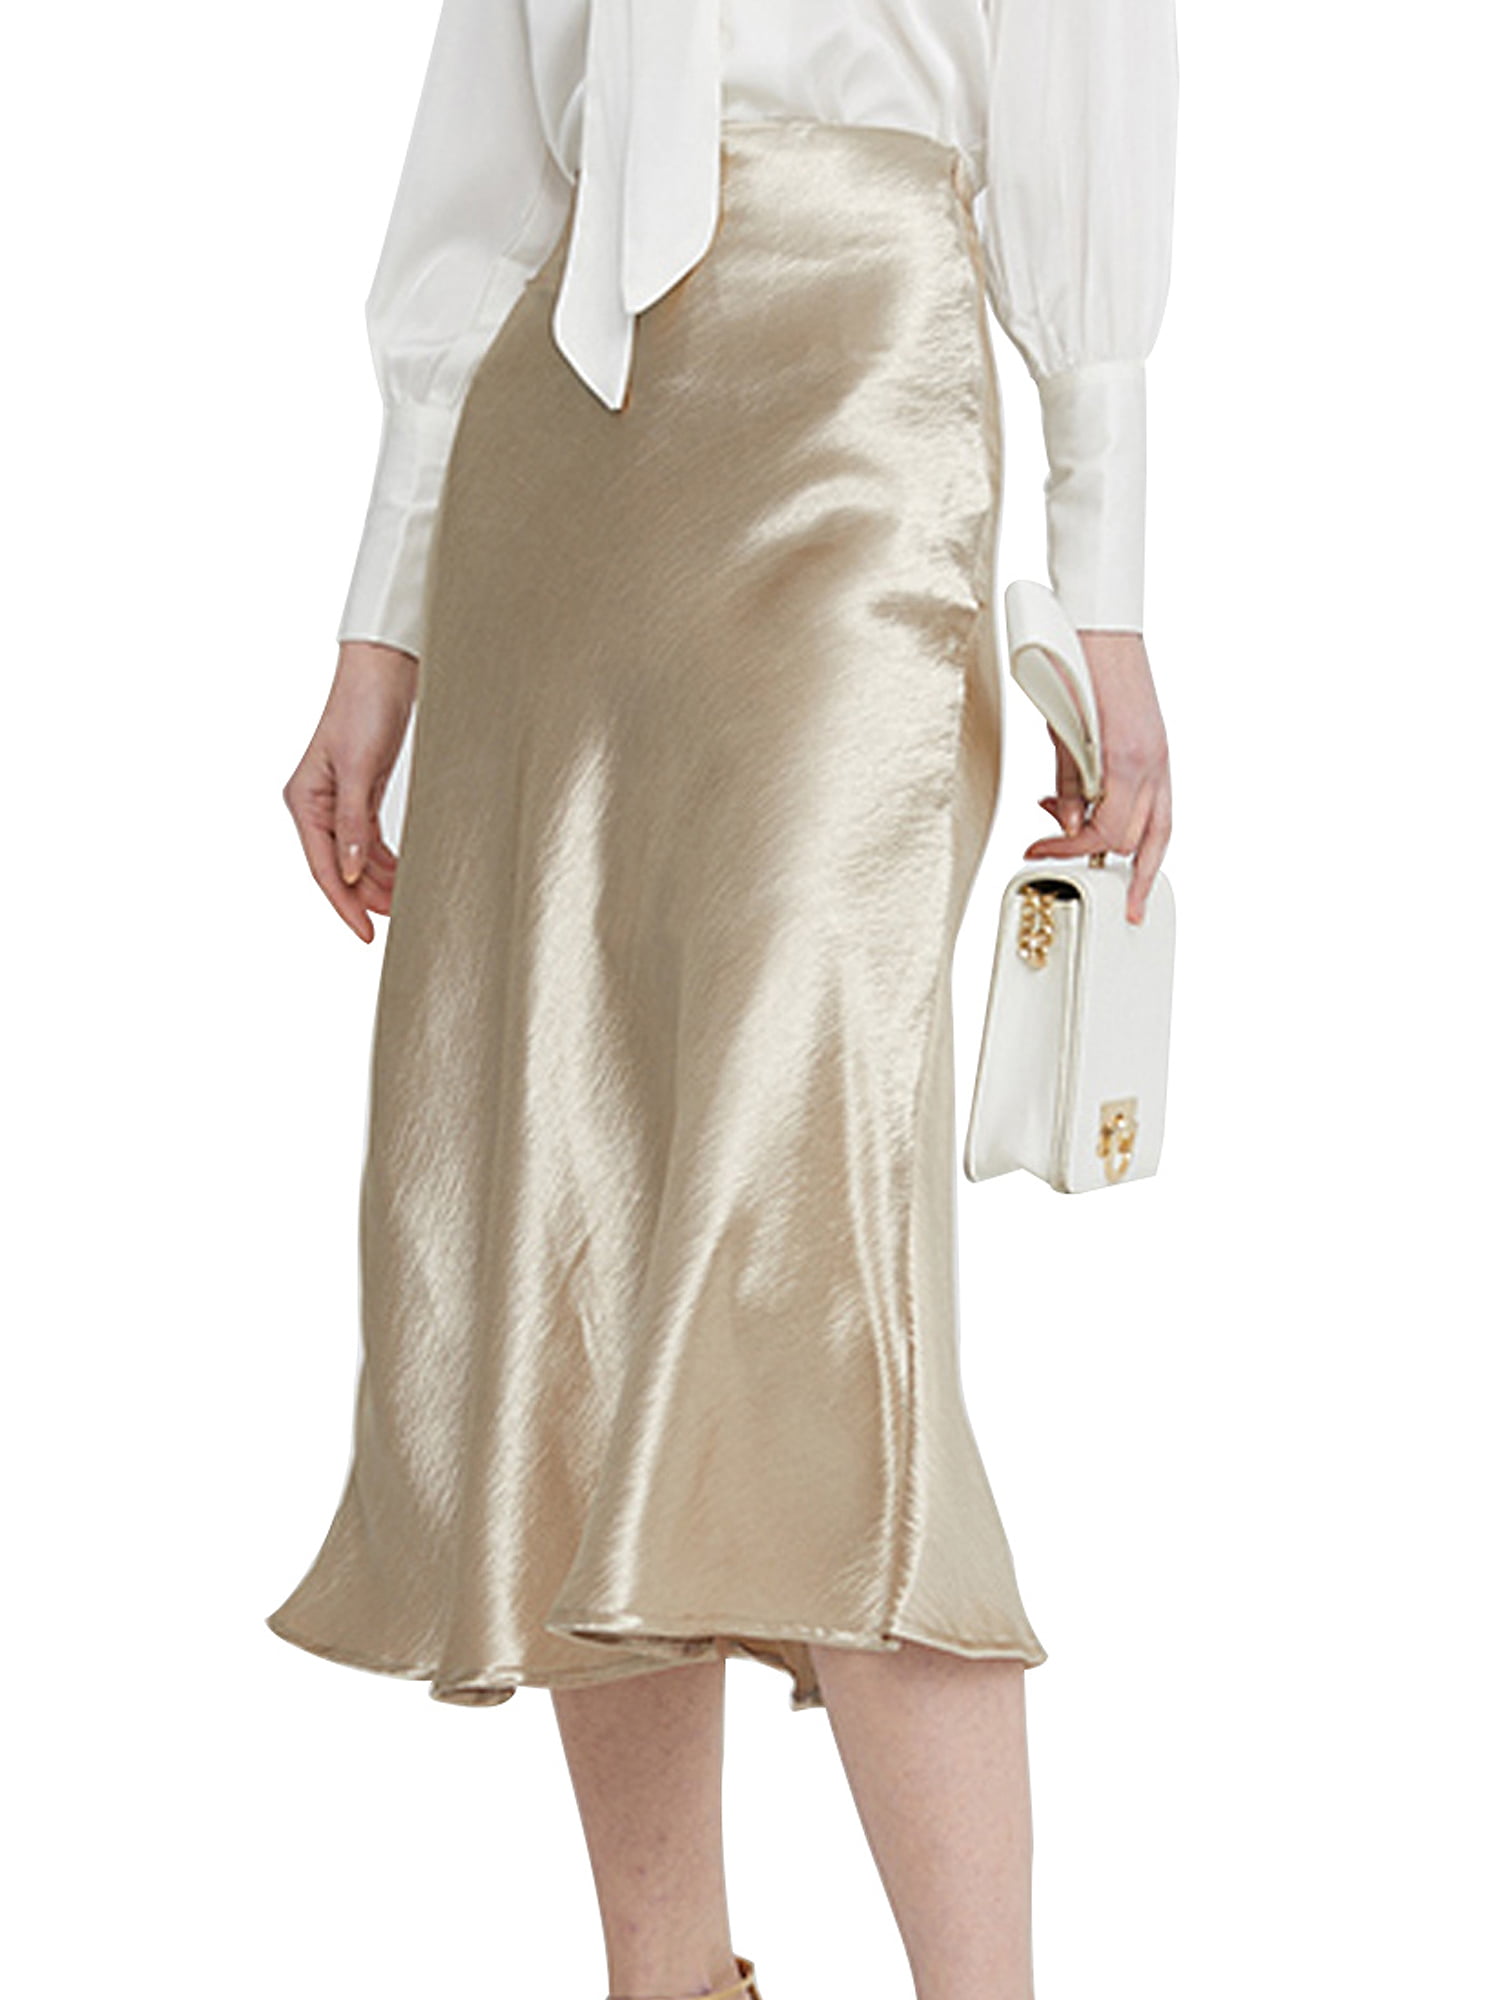 OASIS Gold Metallic Lace Mini Skirt size 12 Brand New